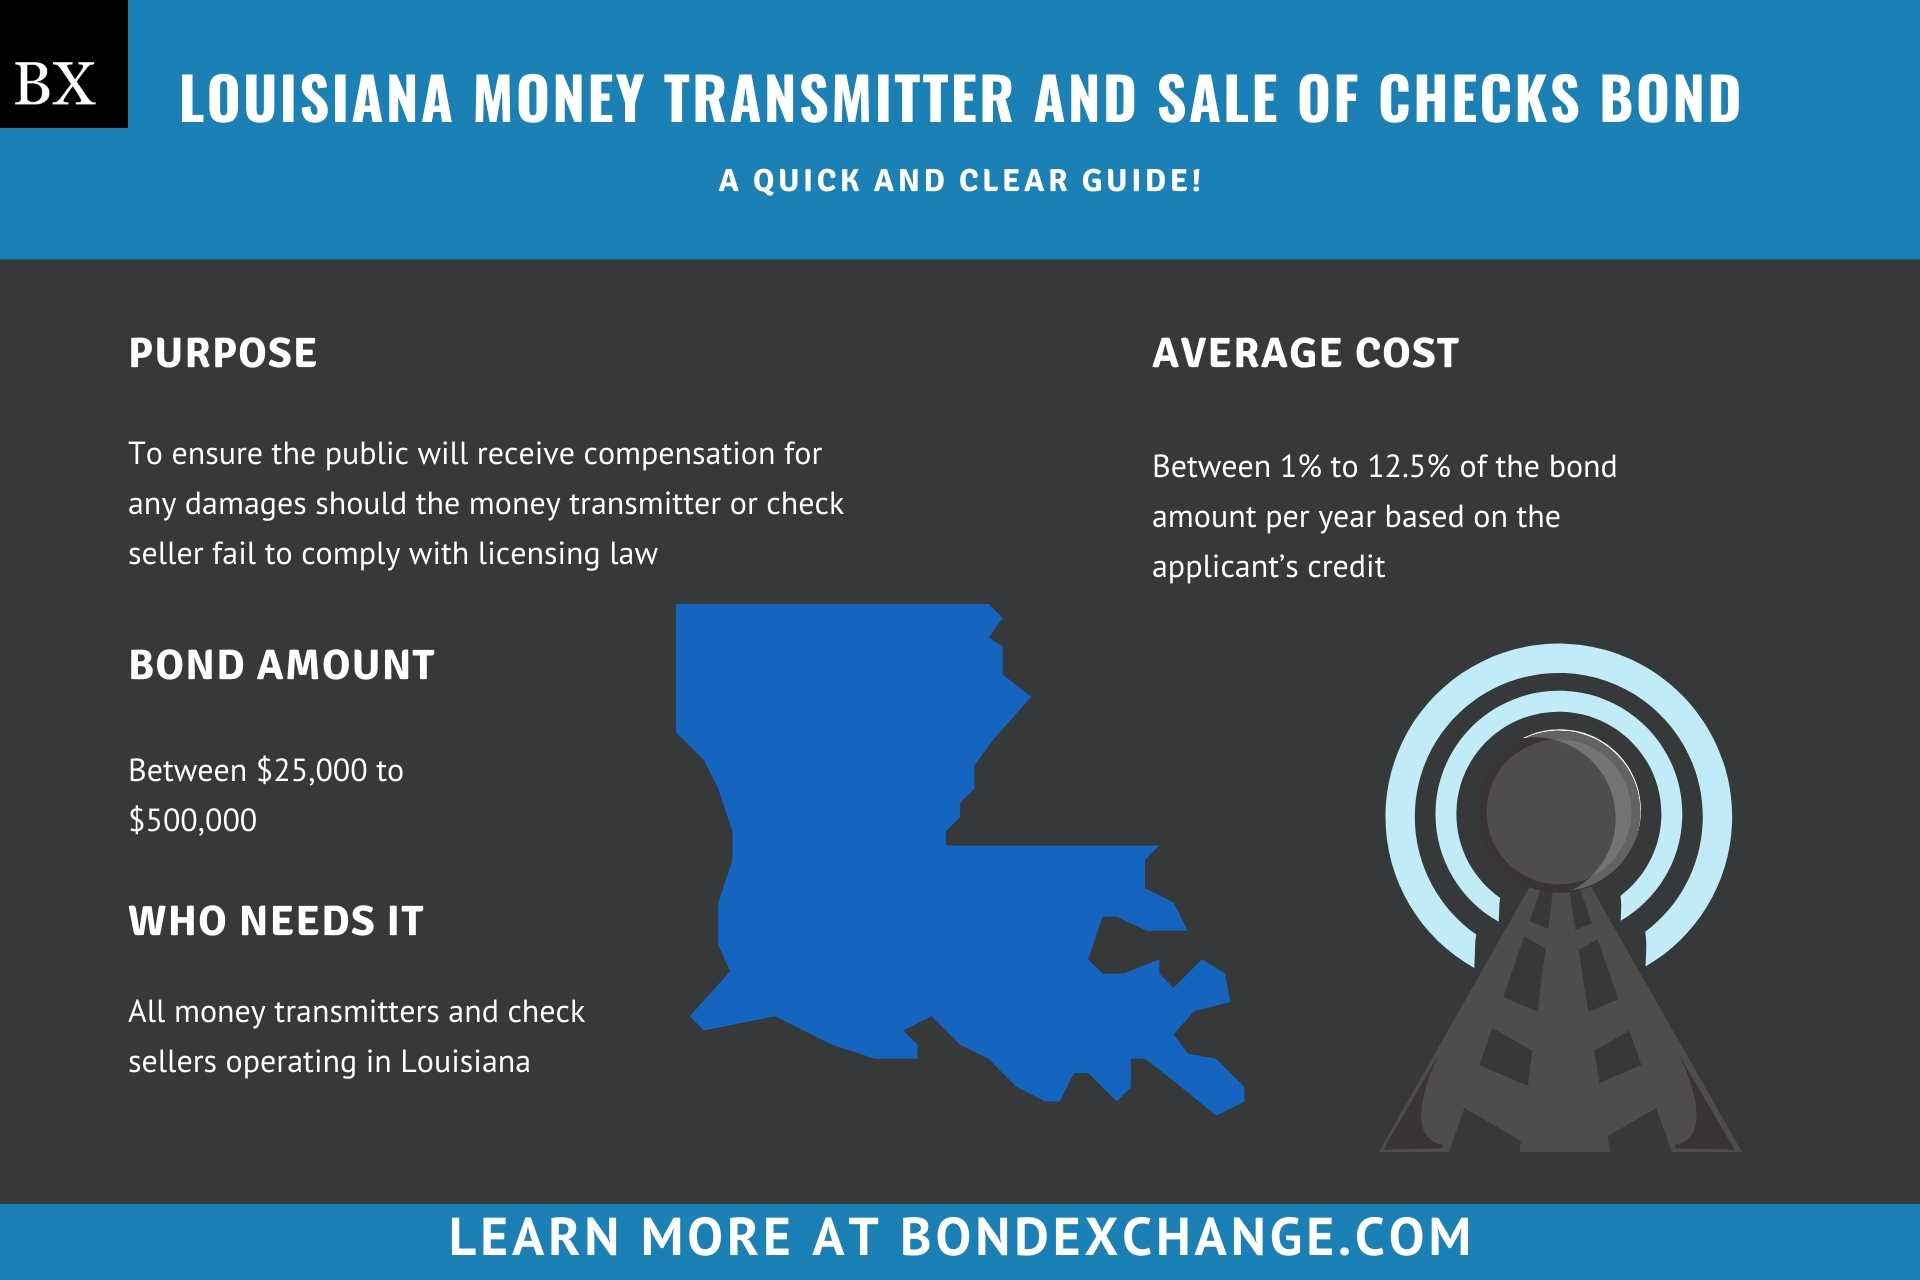 Louisiana Money Transmitter and Sale of Checks Bond